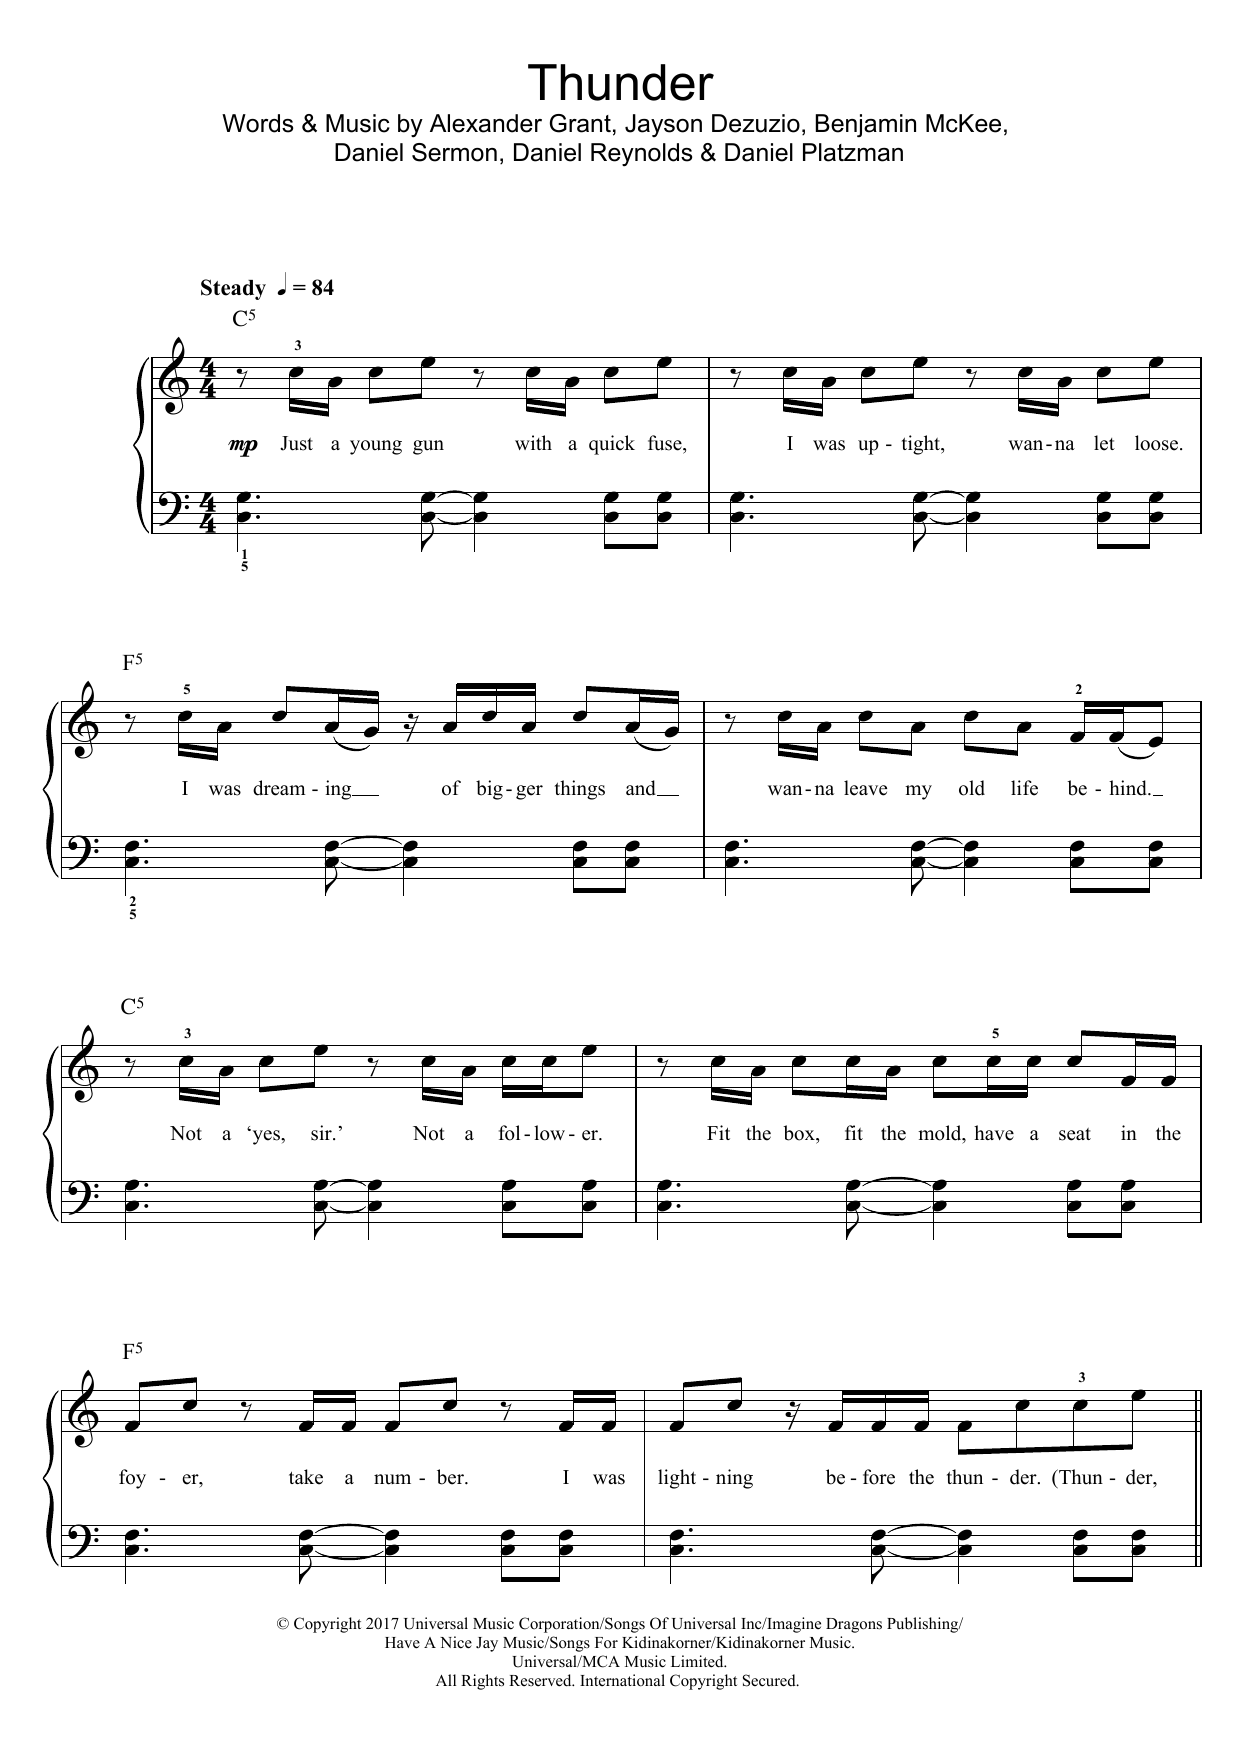 Imagine Dragons Thunder Sheet Music Notes & Chords for Piano (Big Notes) - Download or Print PDF